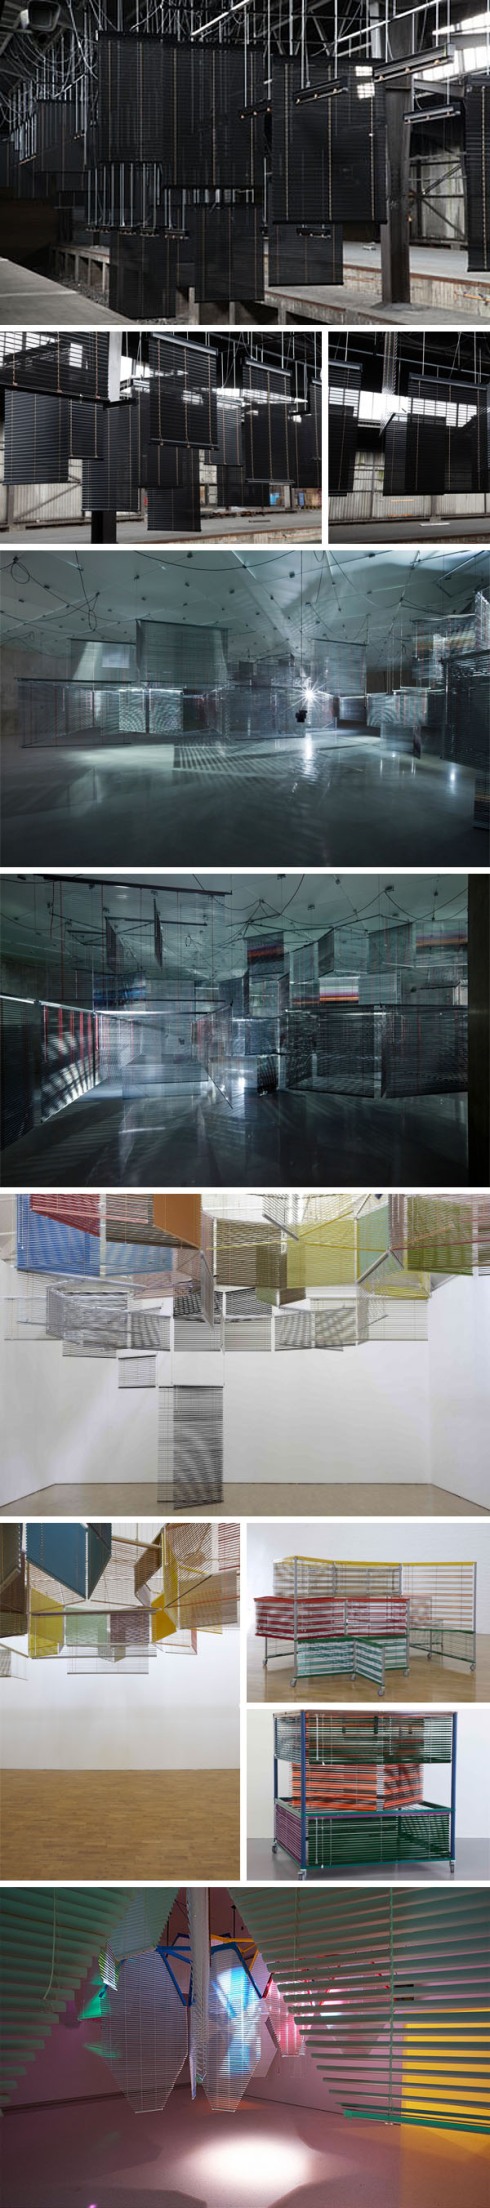 Korean Contemporary art, Venetian Blind art installations, Haegue Yang, Heike Jung, Documenta13